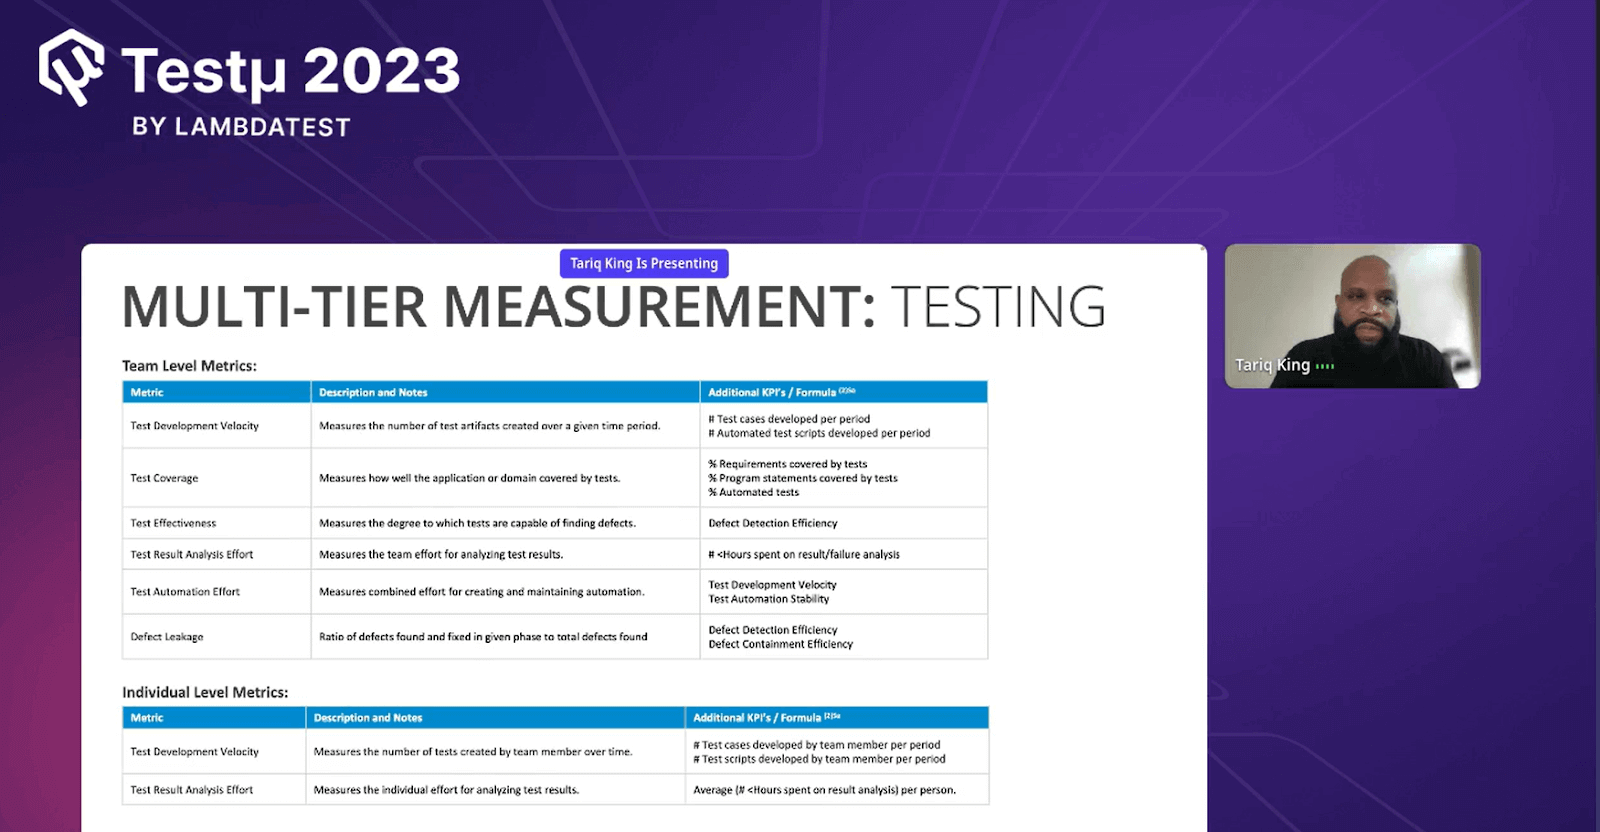 Multi-tier measurement: Testing